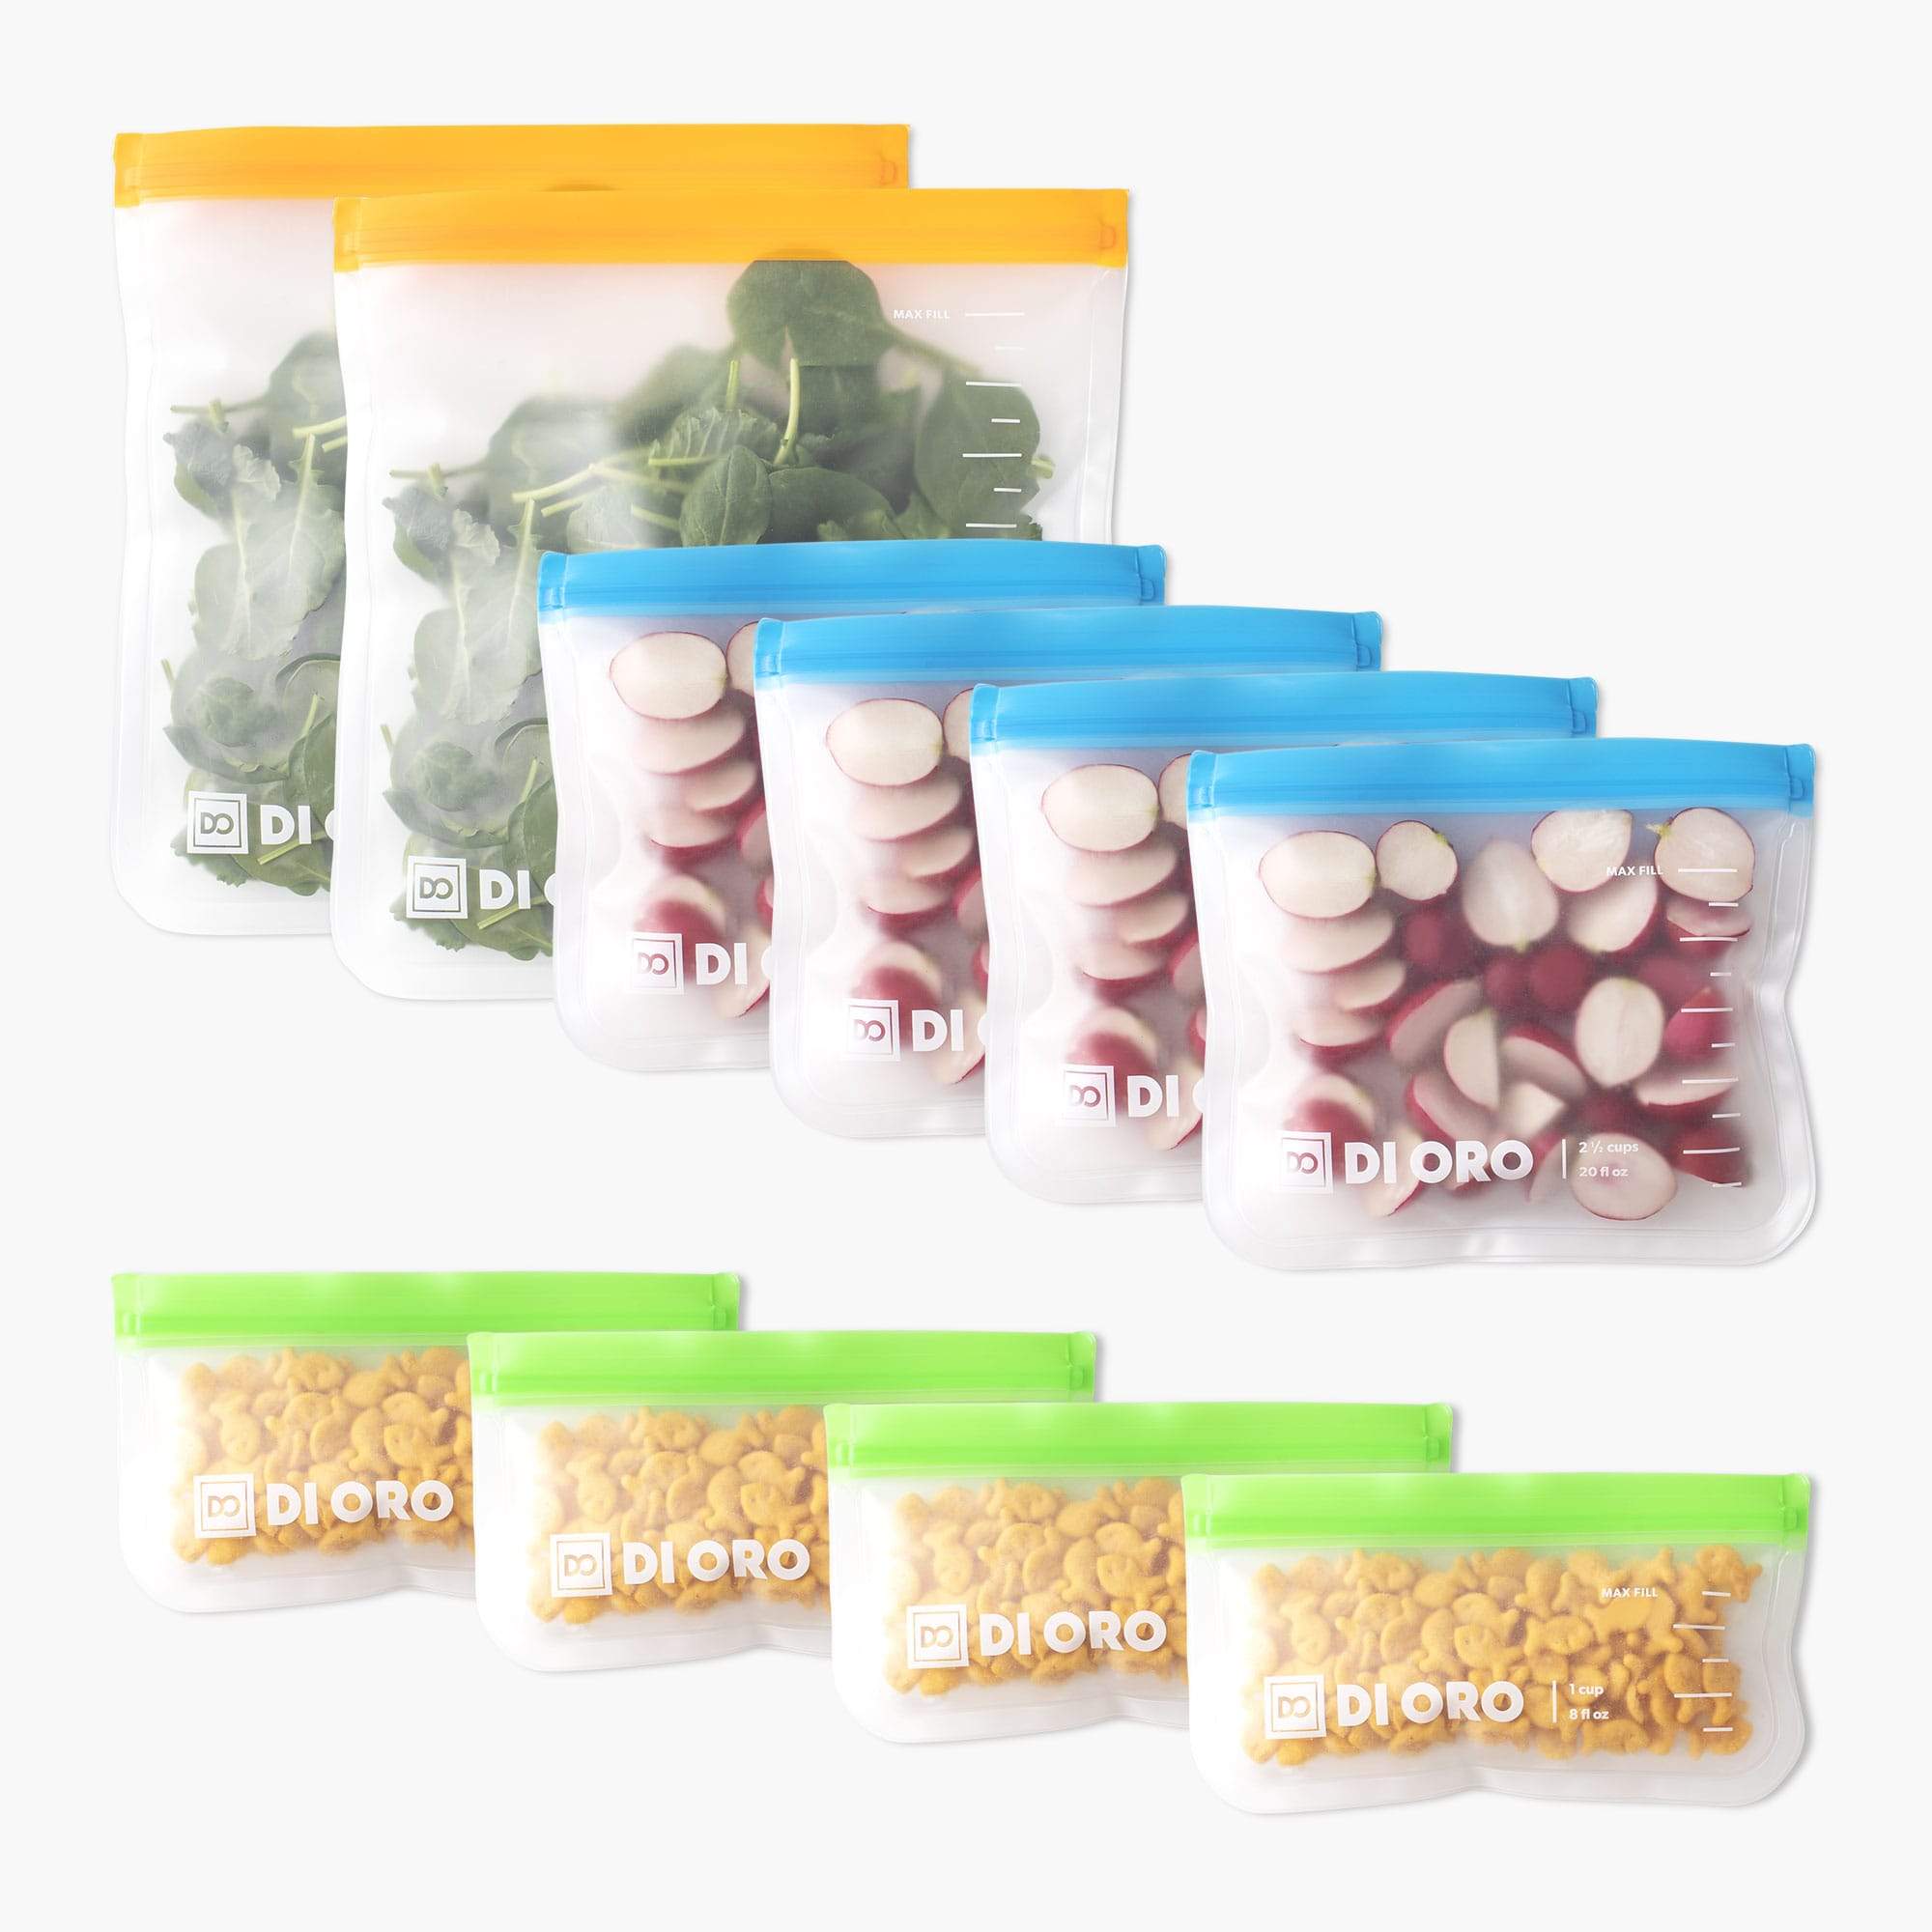 FoodSaver Reusable Quart Vacuum Zipper Bags (10-Count) - McDaniel's Do it  Center